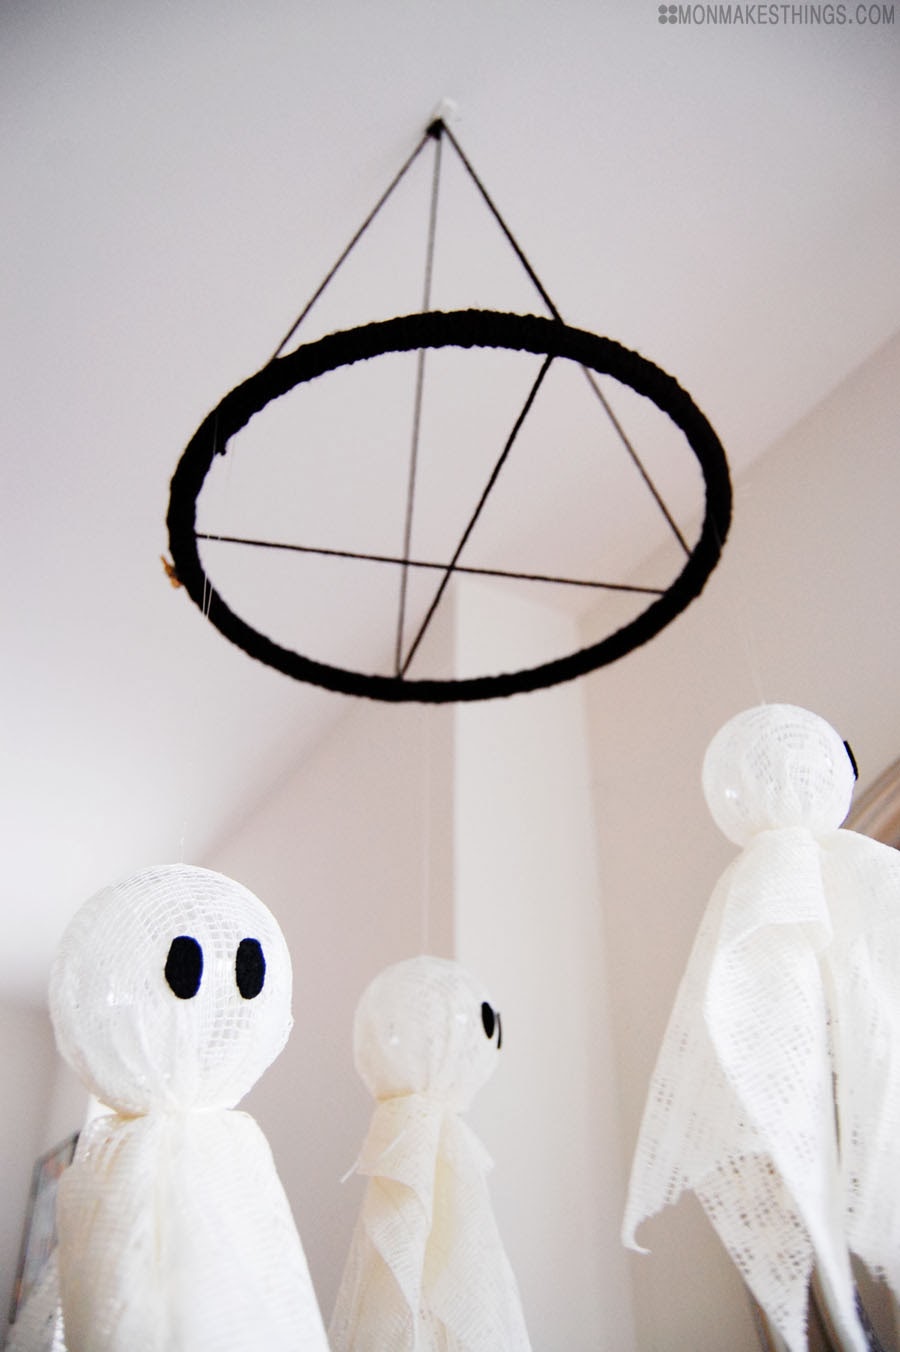 Halloween Funny White Ghosts Diy Felt Sheets Scissors Thread